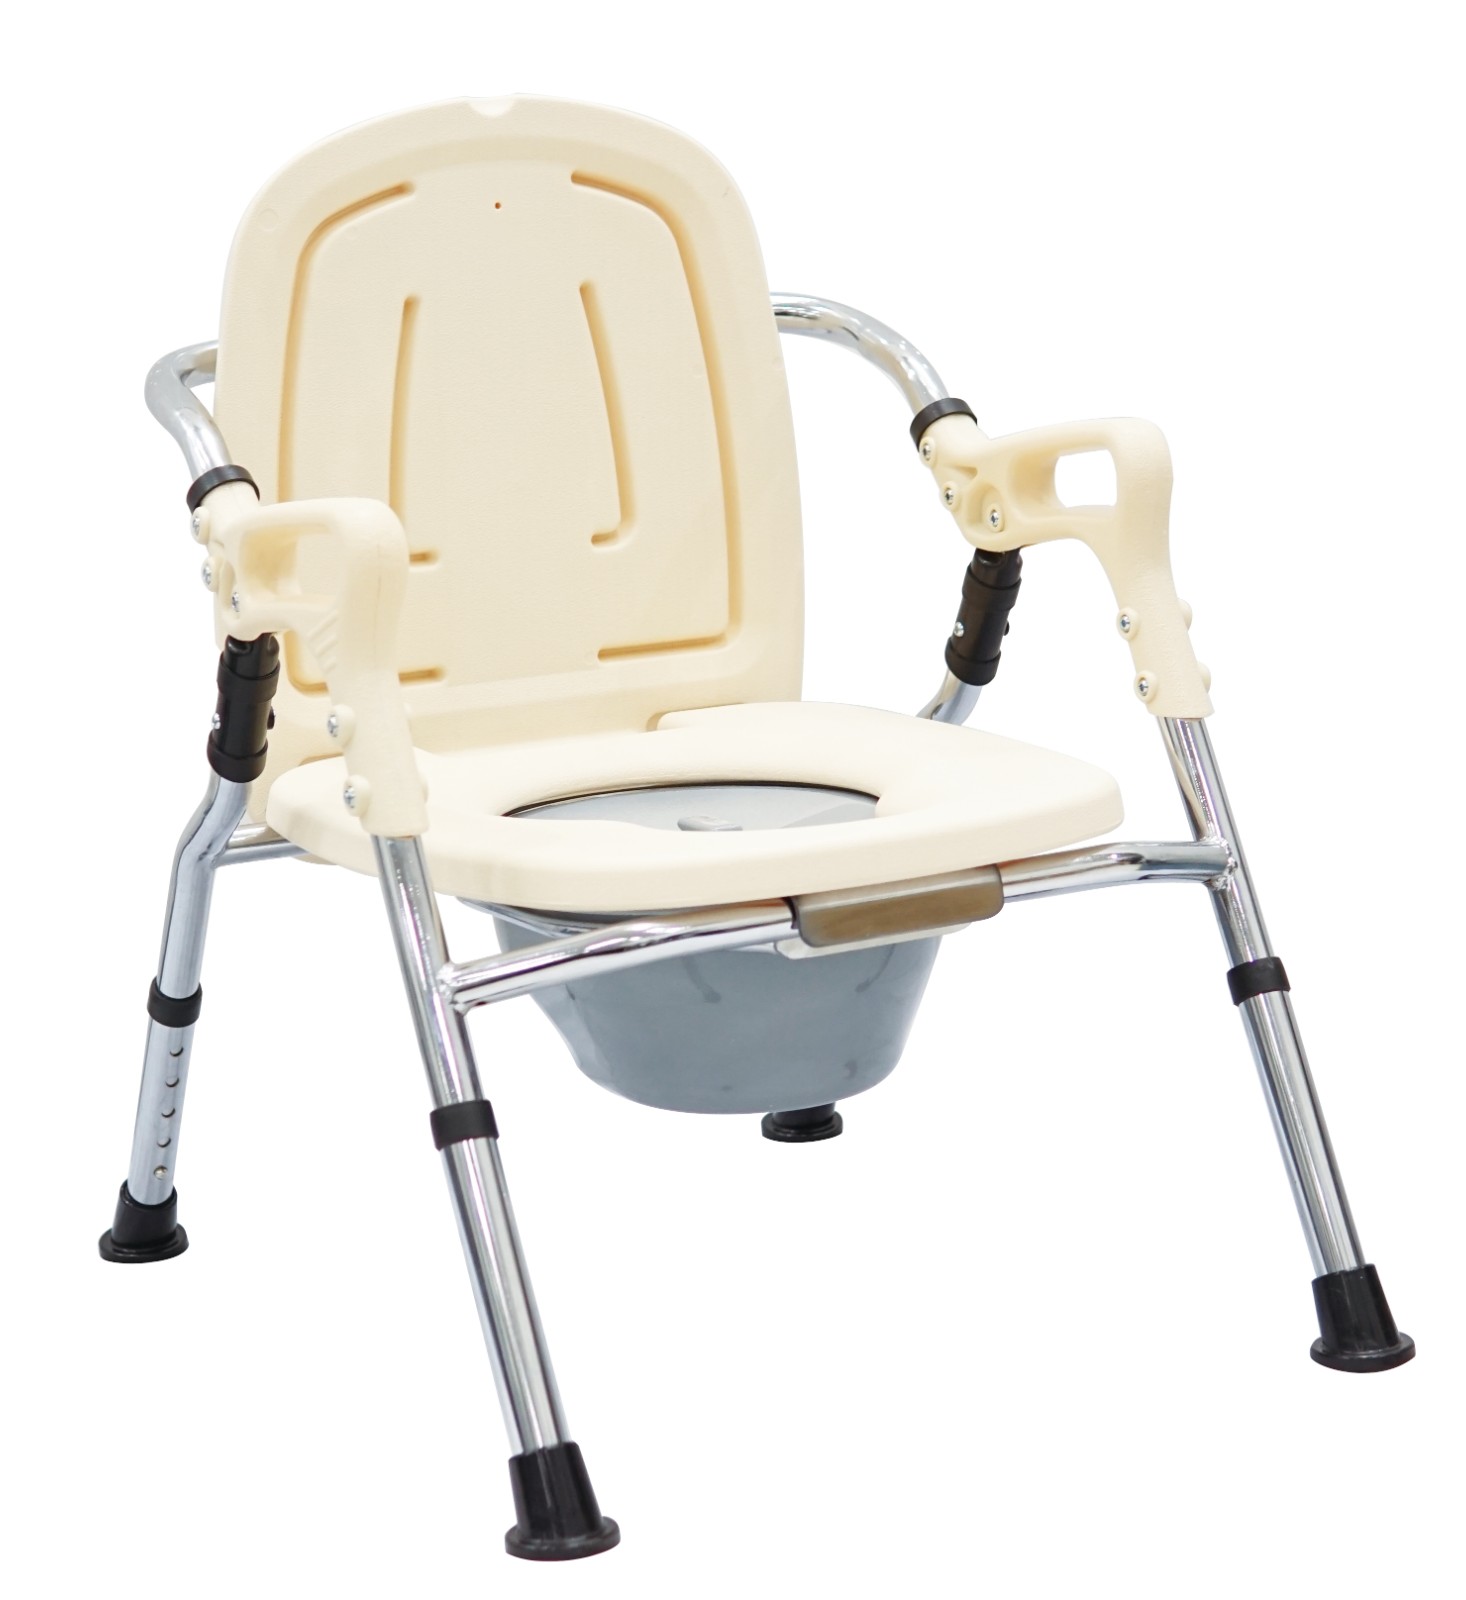 Child toilet chair